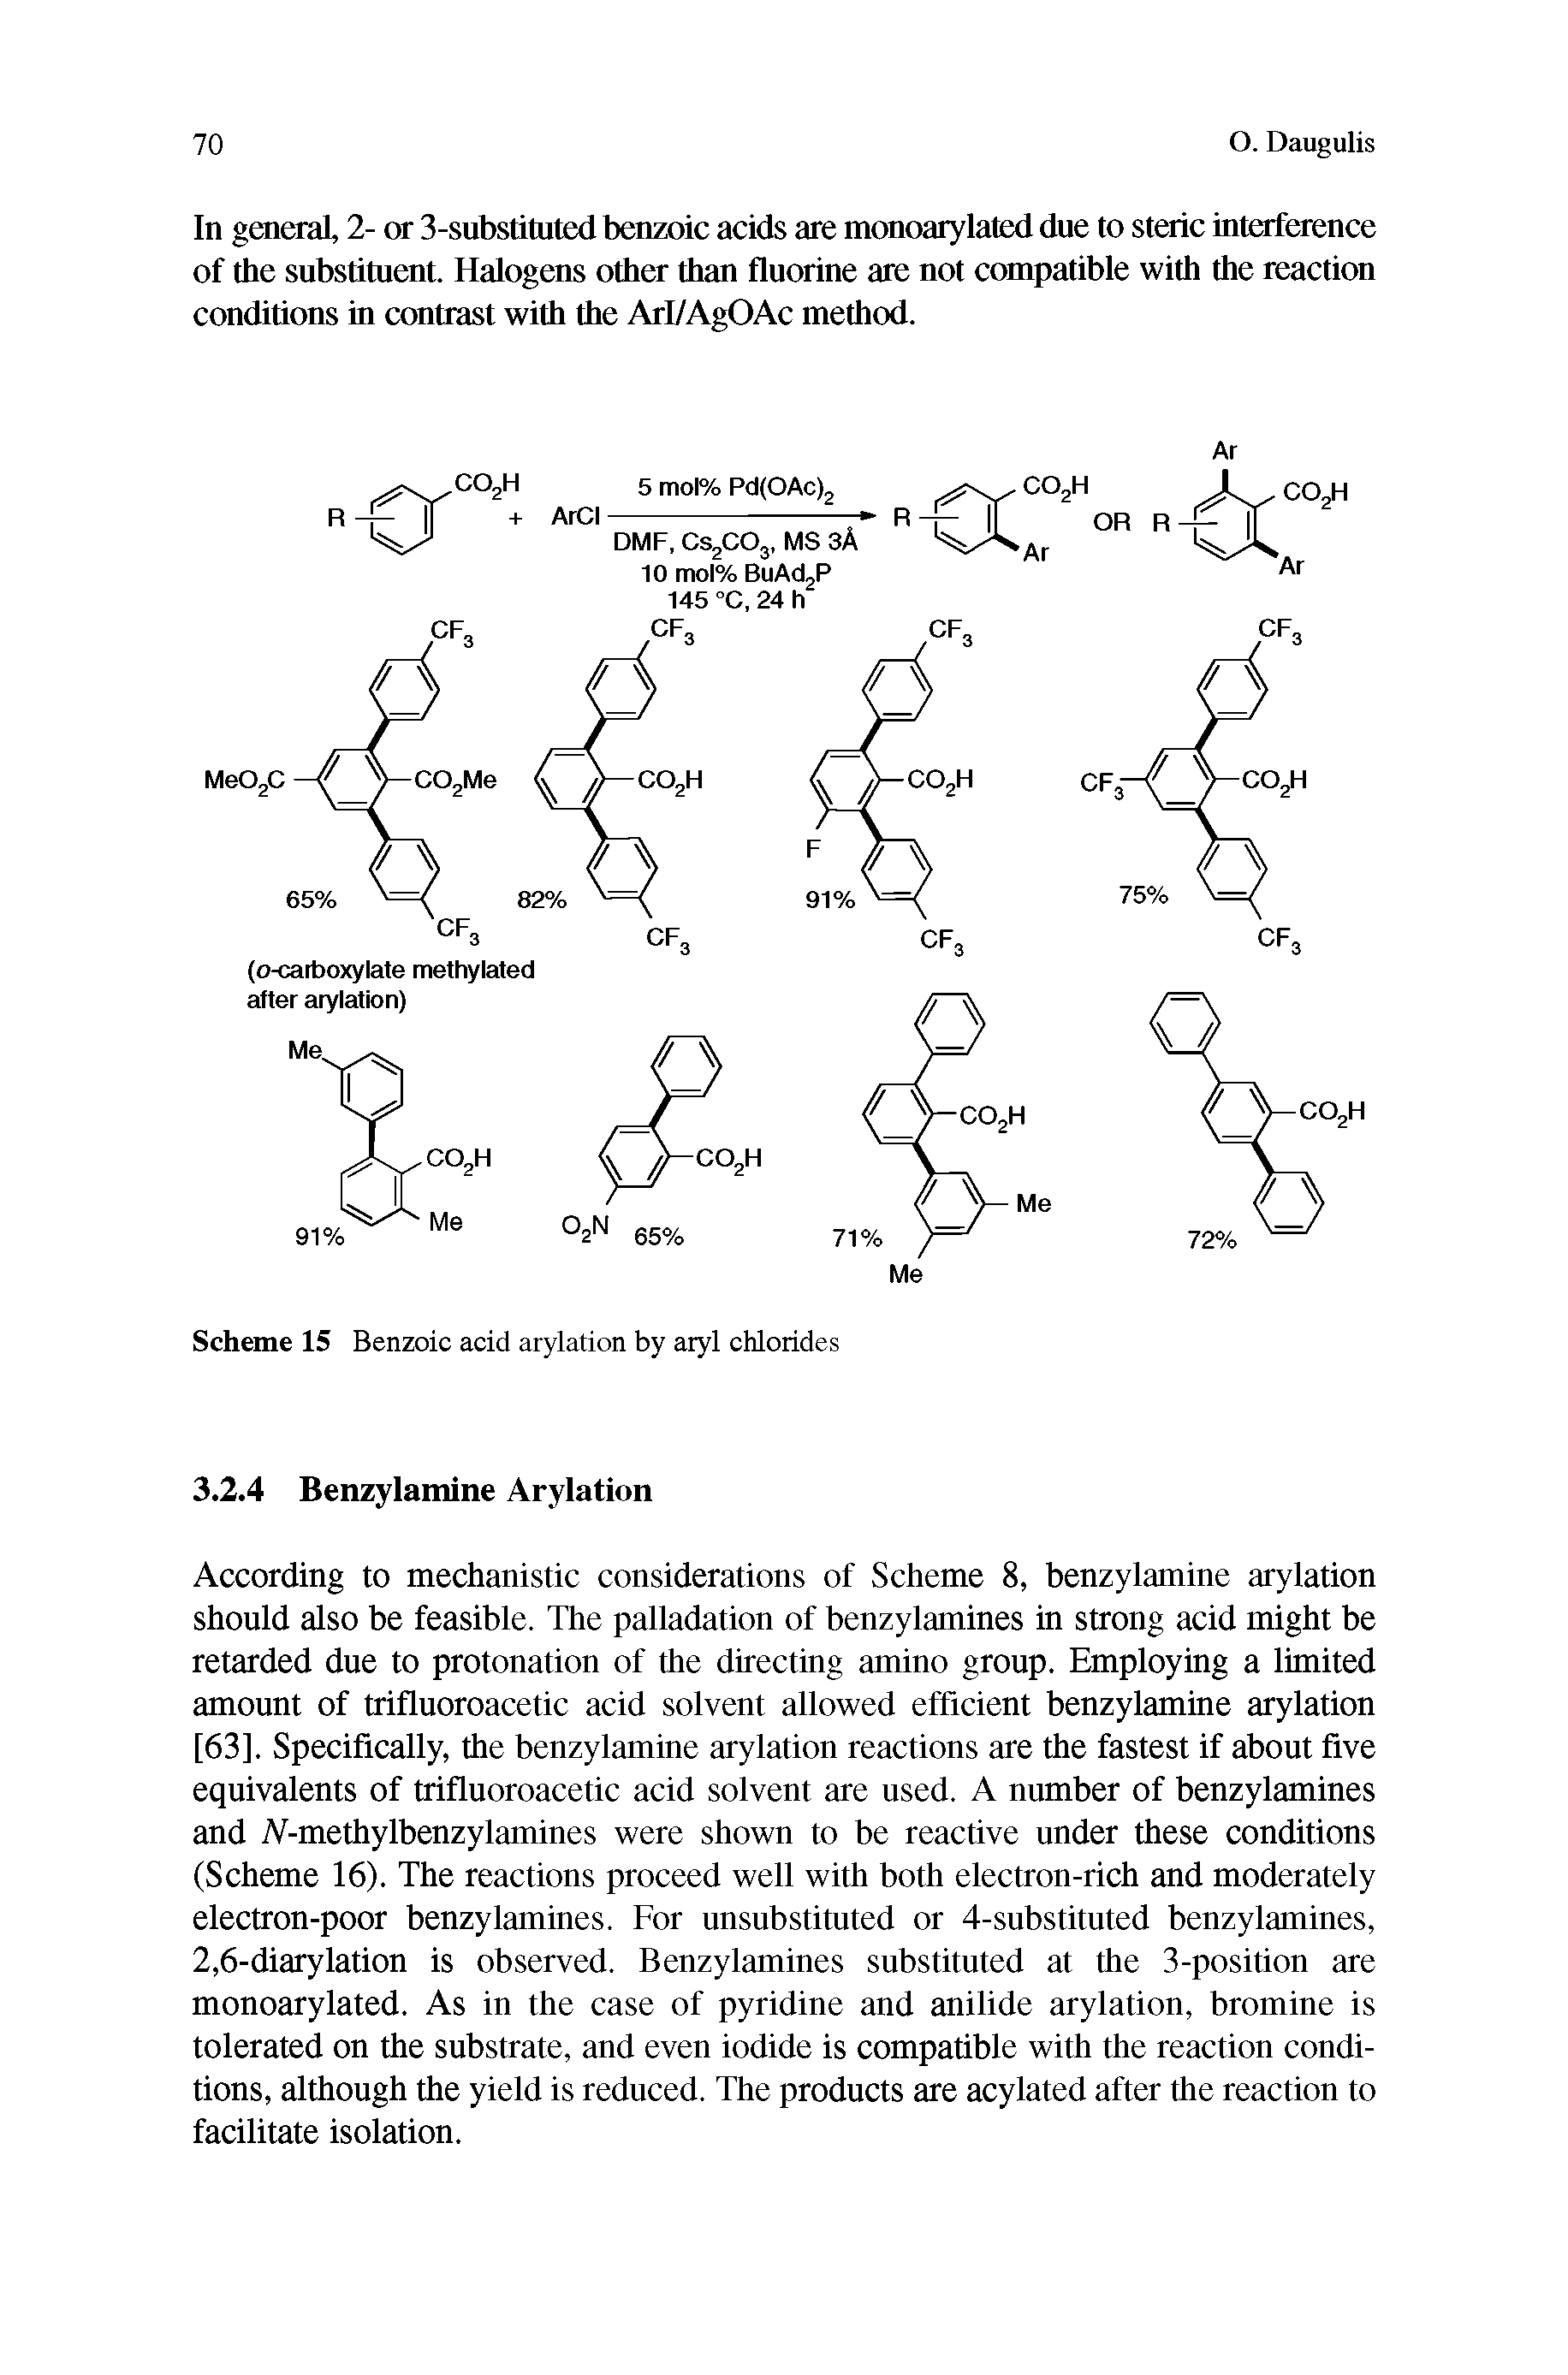 Scheme 15 Benzoic acid arylation by aryl chlorides...